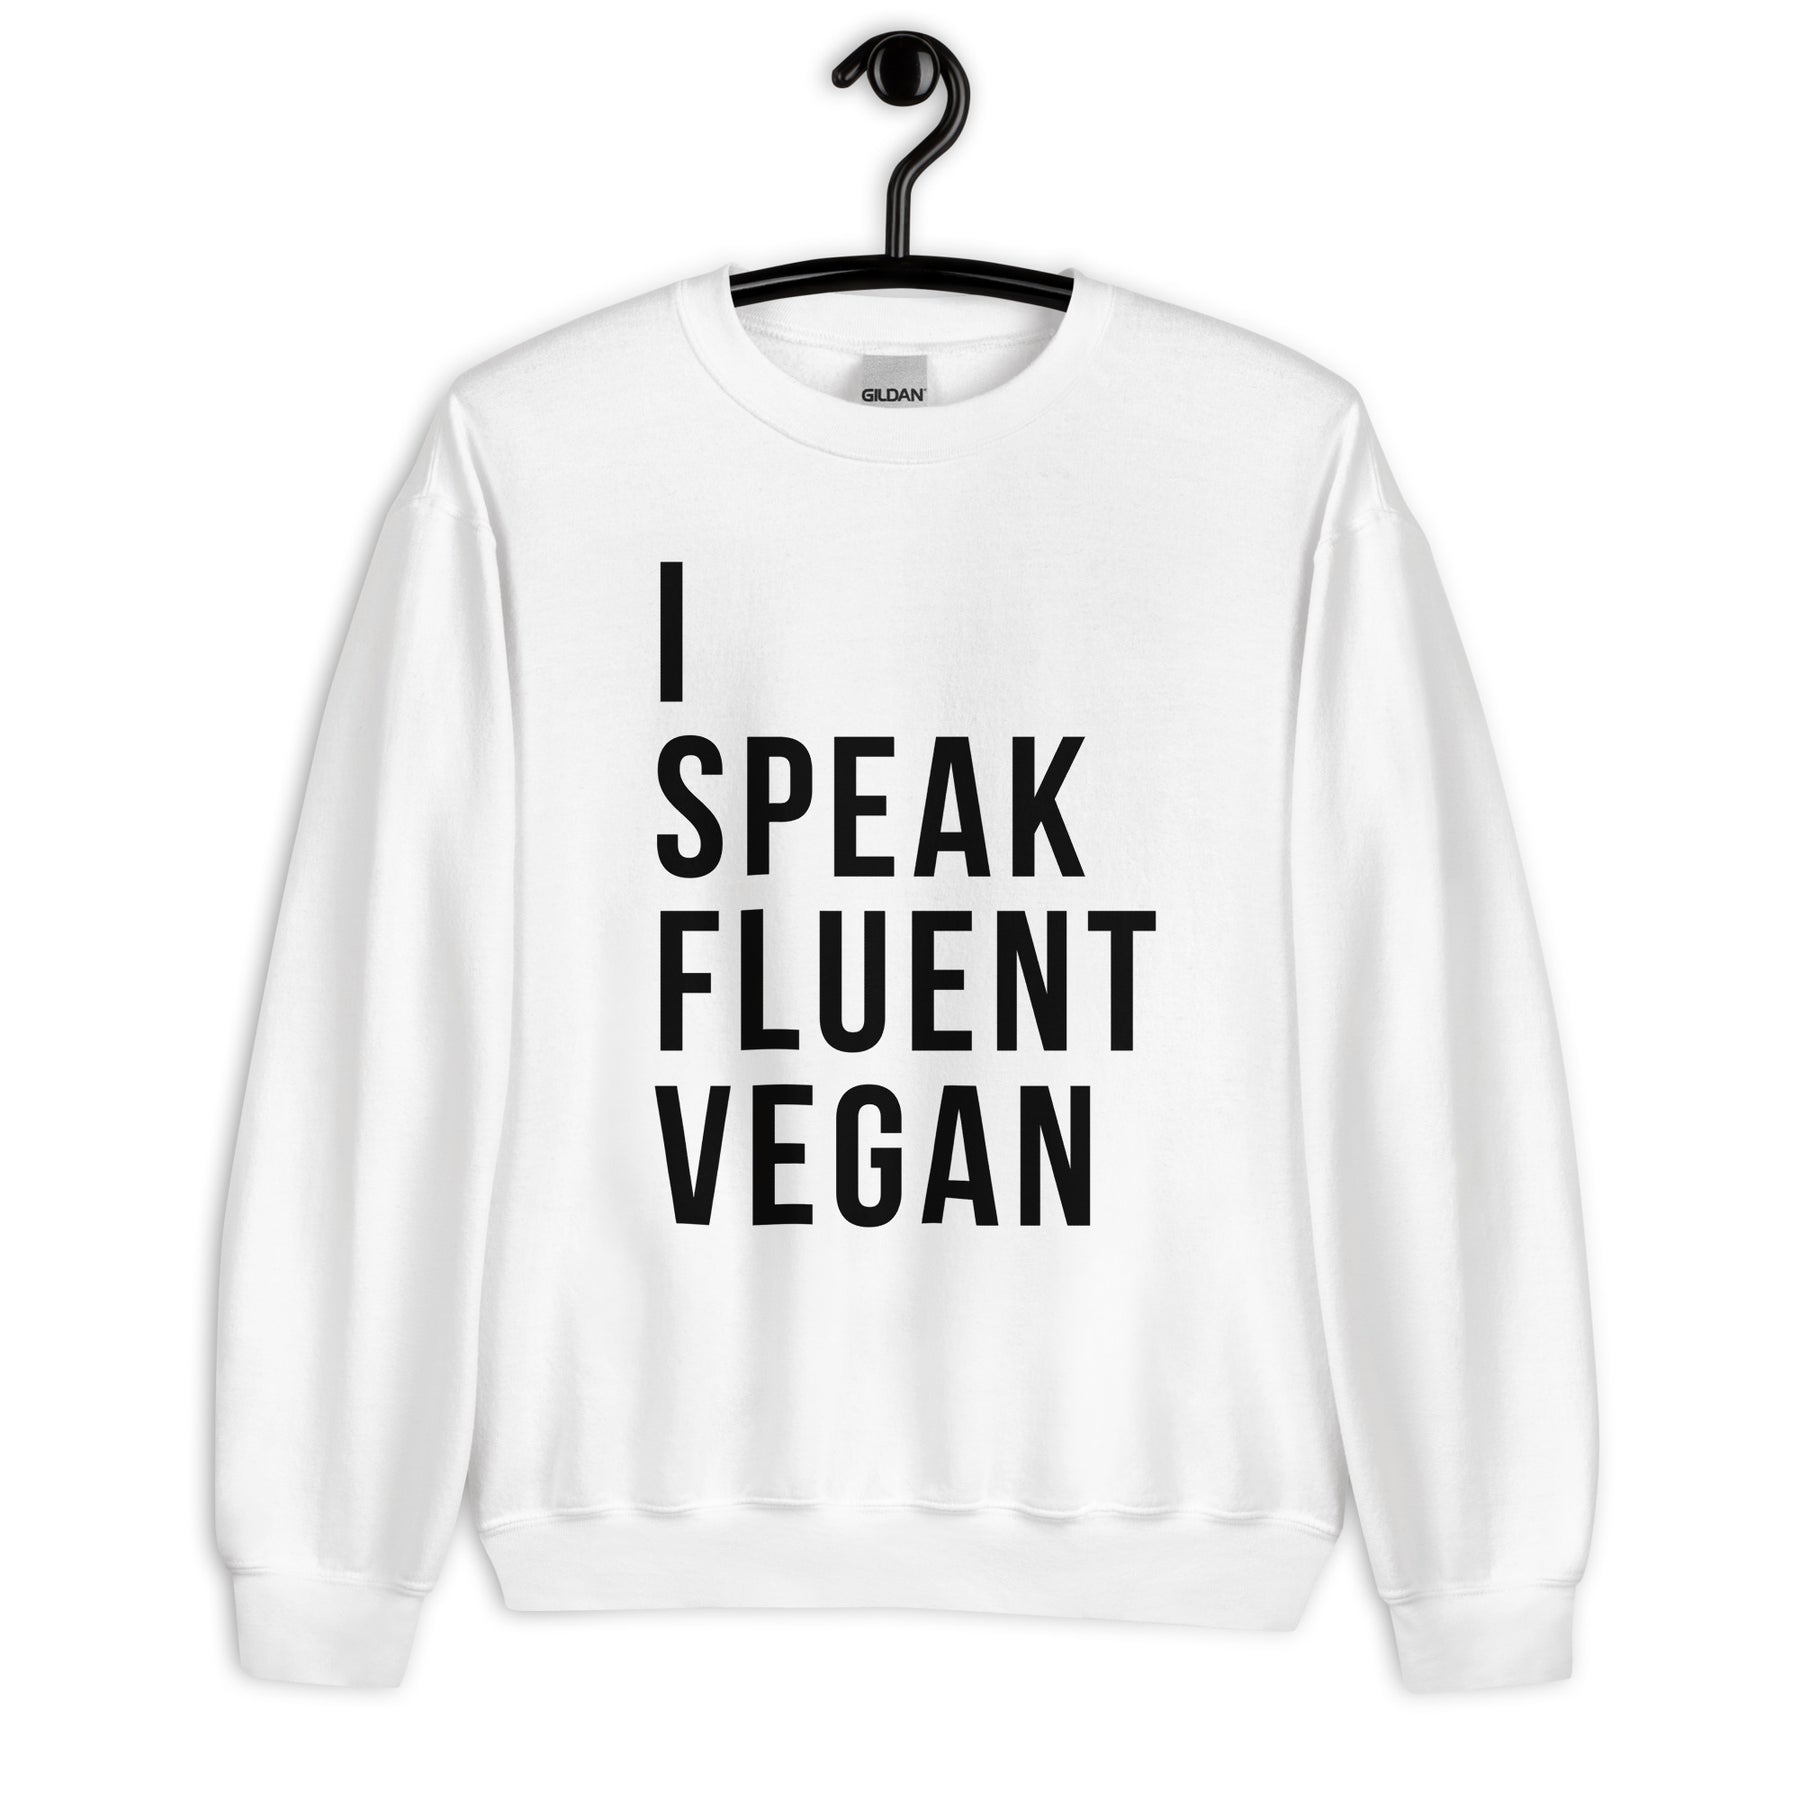 I SPEAK FLUENT VEGAN Sweatshirt